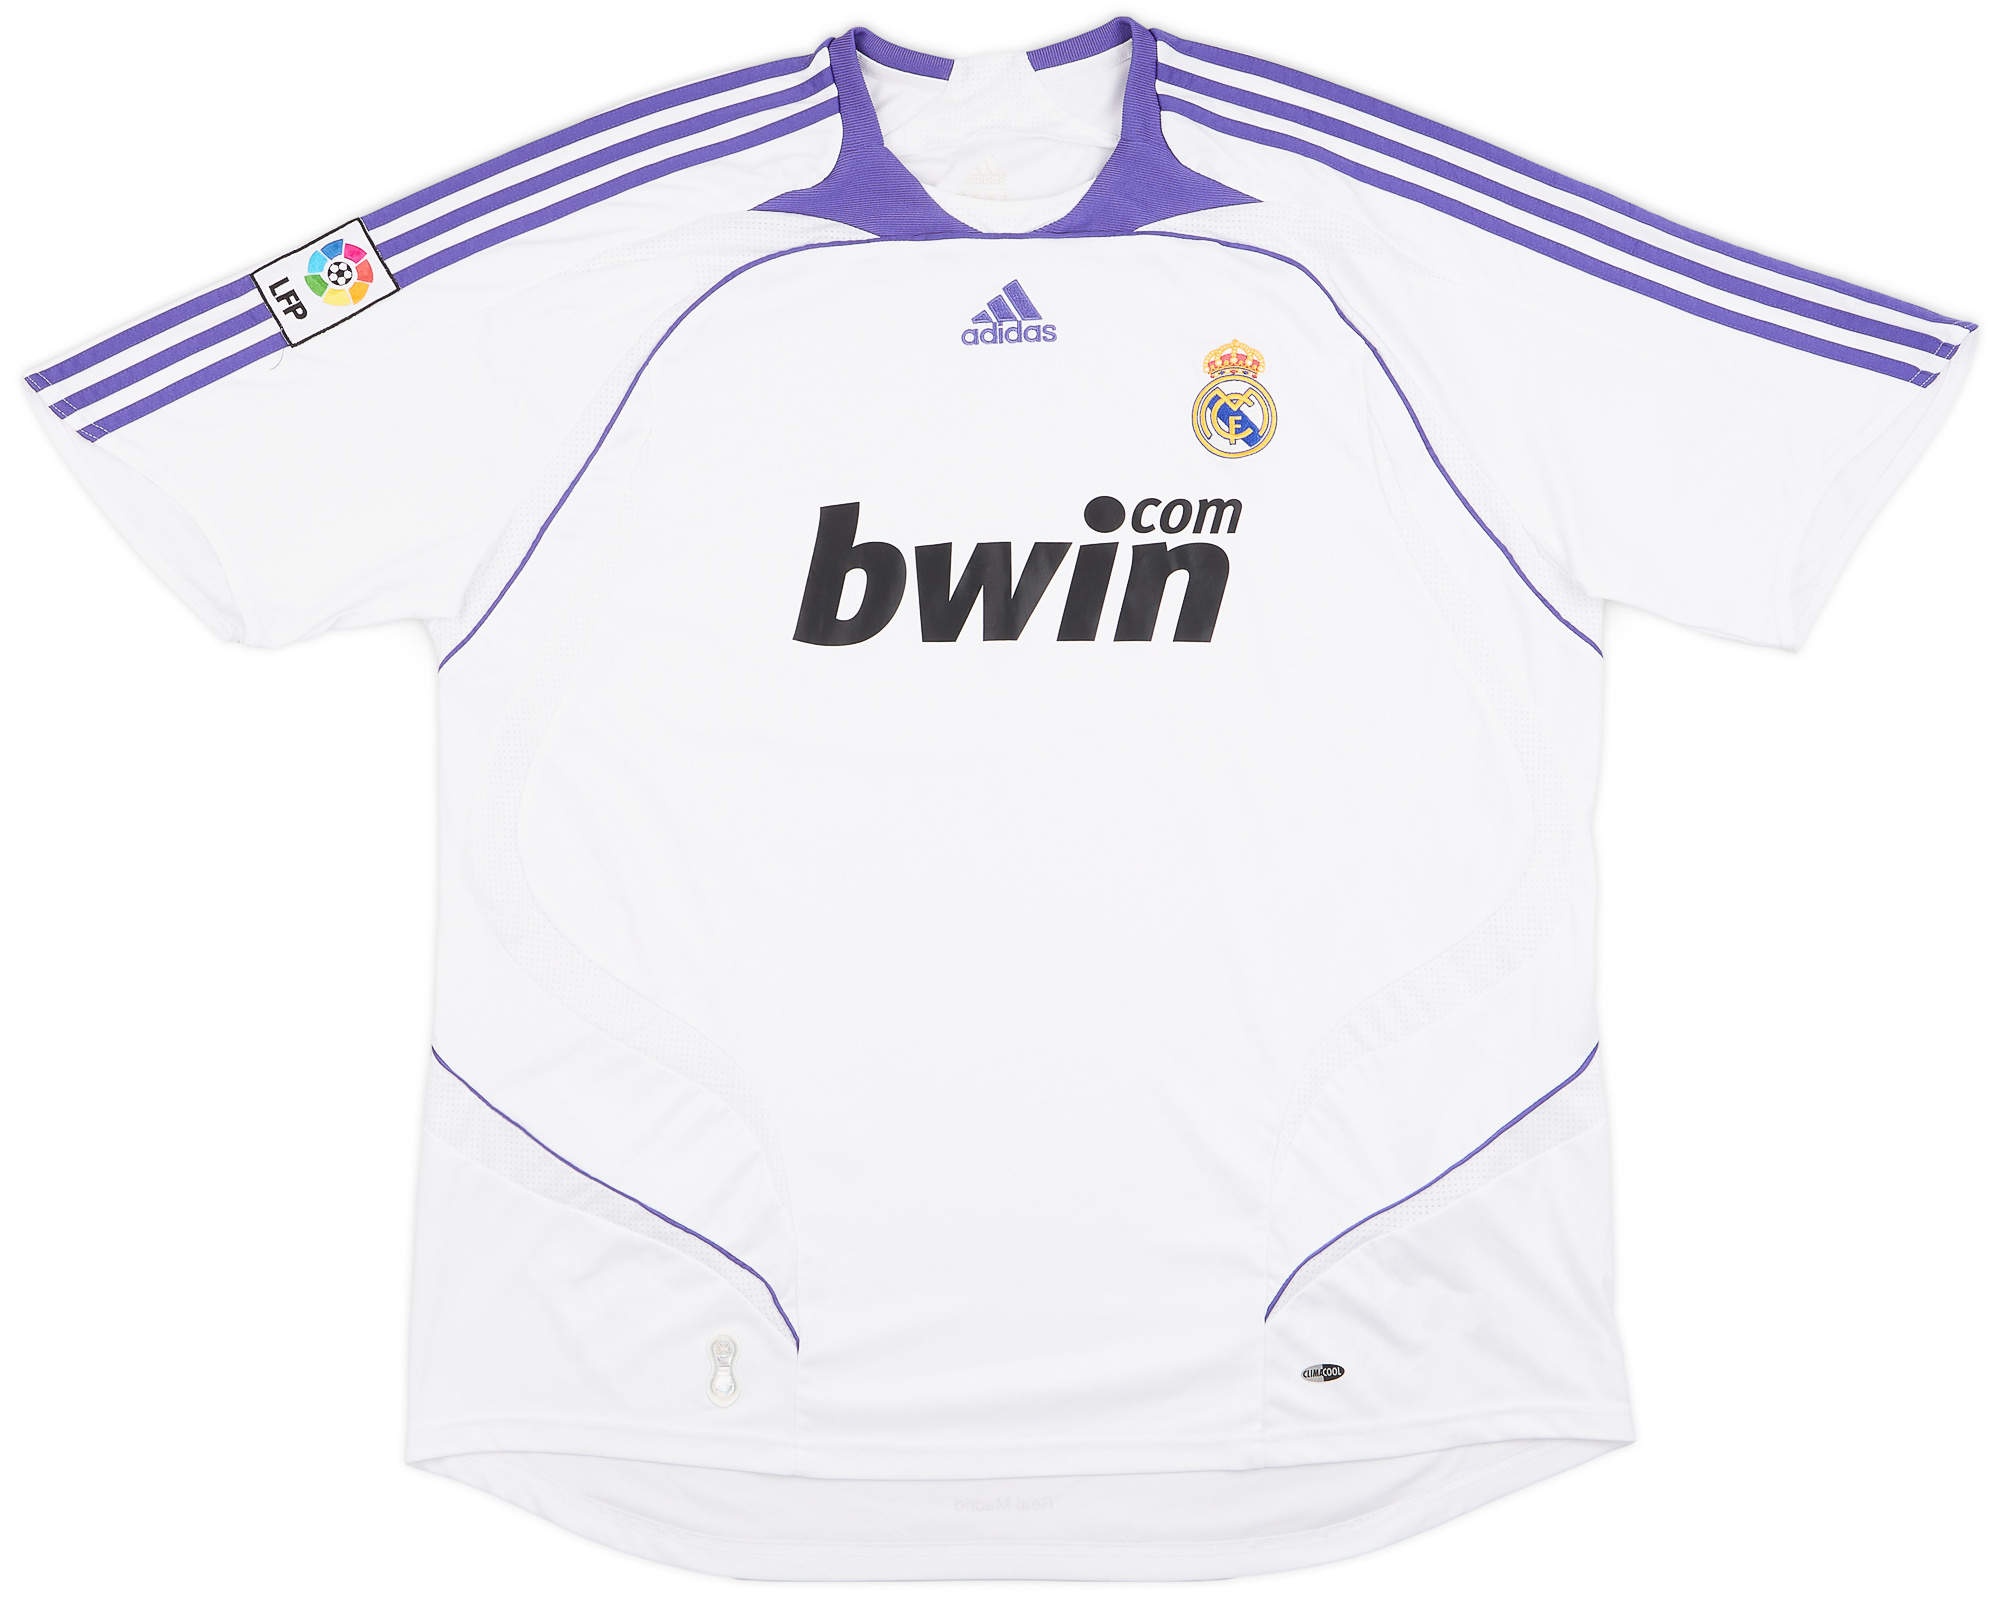 2007-08 Real Madrid Home Shirt - 9/10 - ()